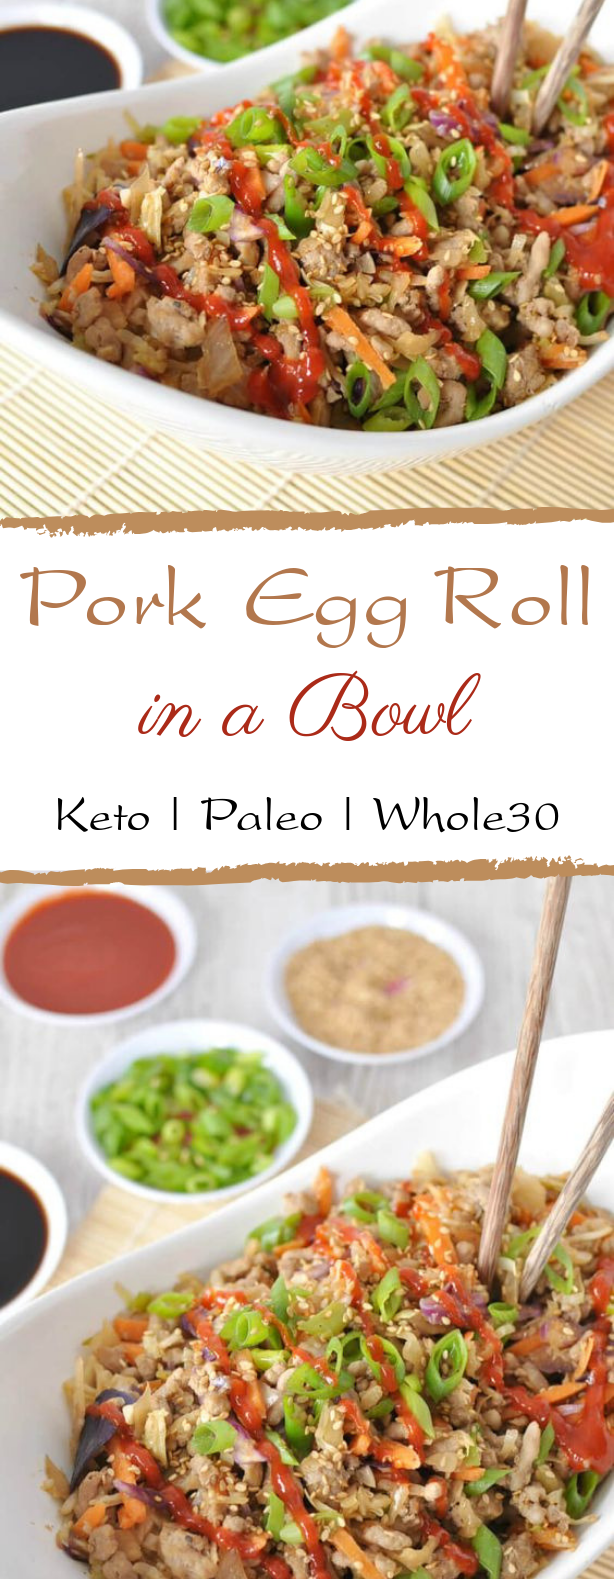 Pork Egg Roll in a Bowl #keto #paleo